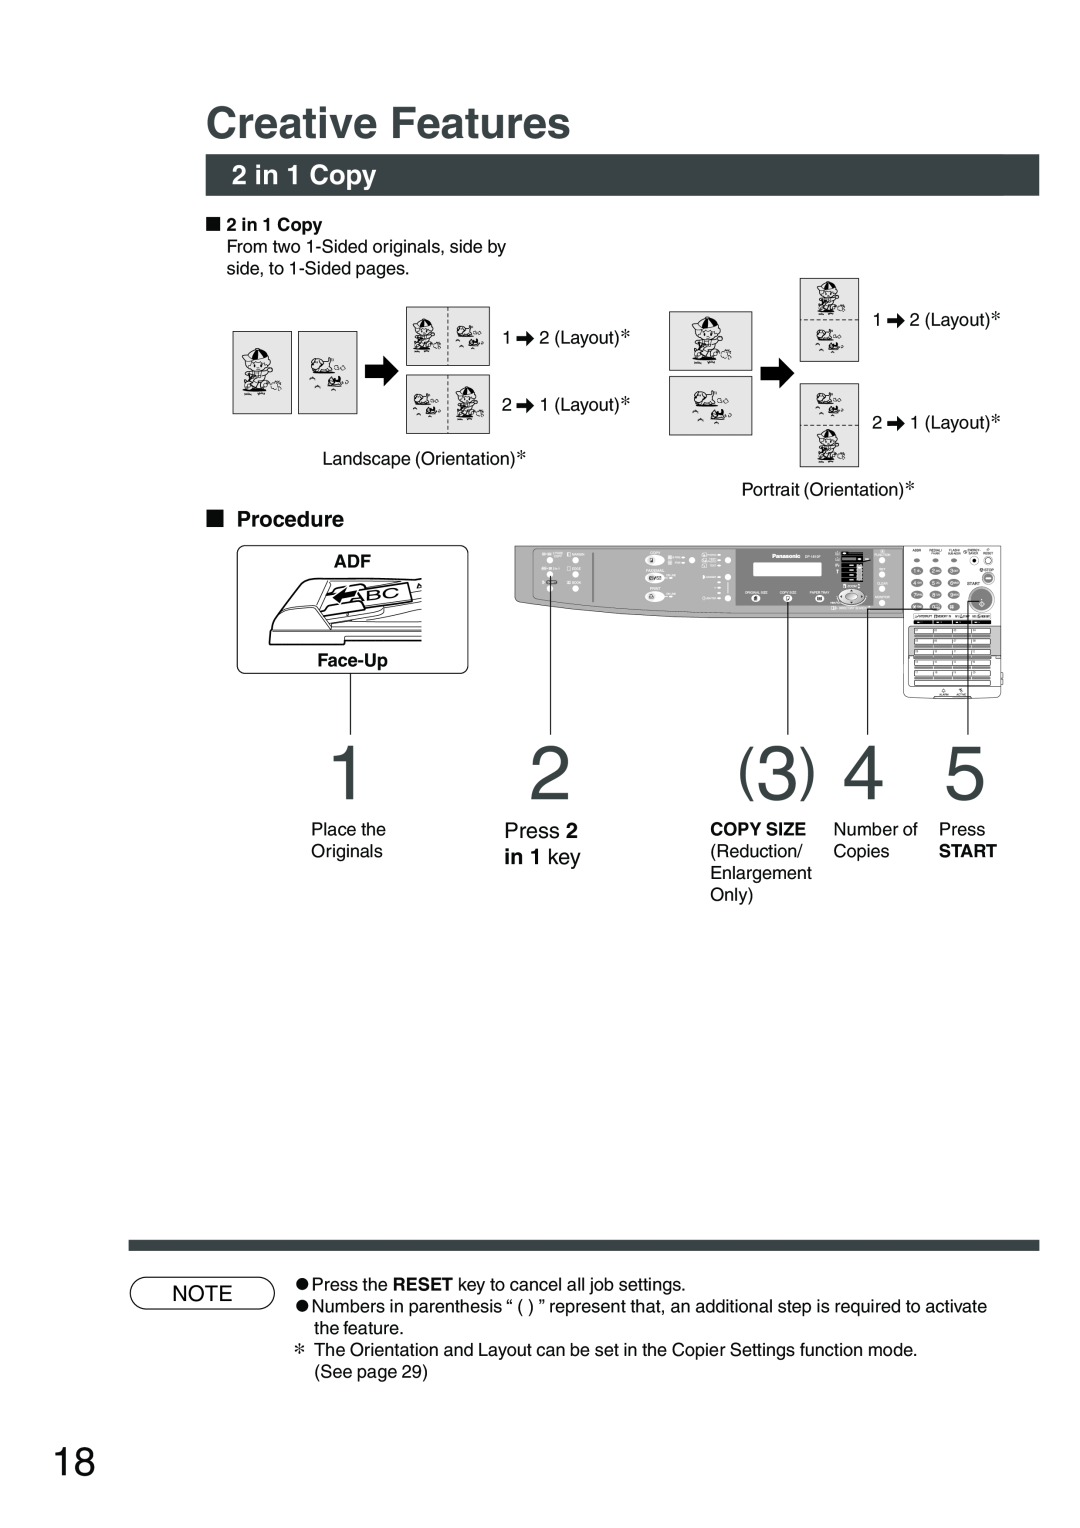 Panasonic DP-1810F manual Creative Features, 2 in 1 Copy, Procedure, in 1 key 